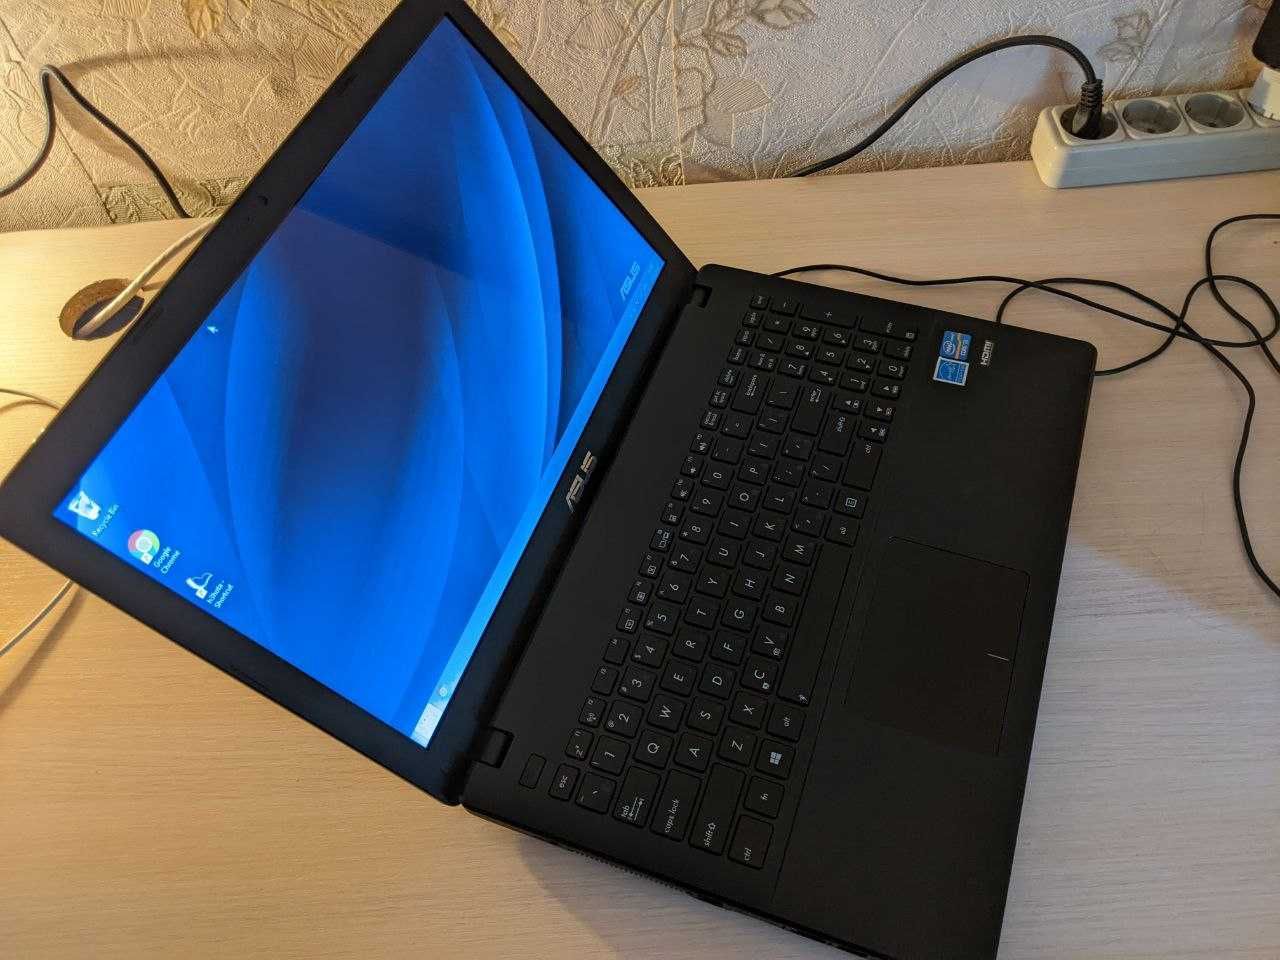 Ноутбук ASUS X551C